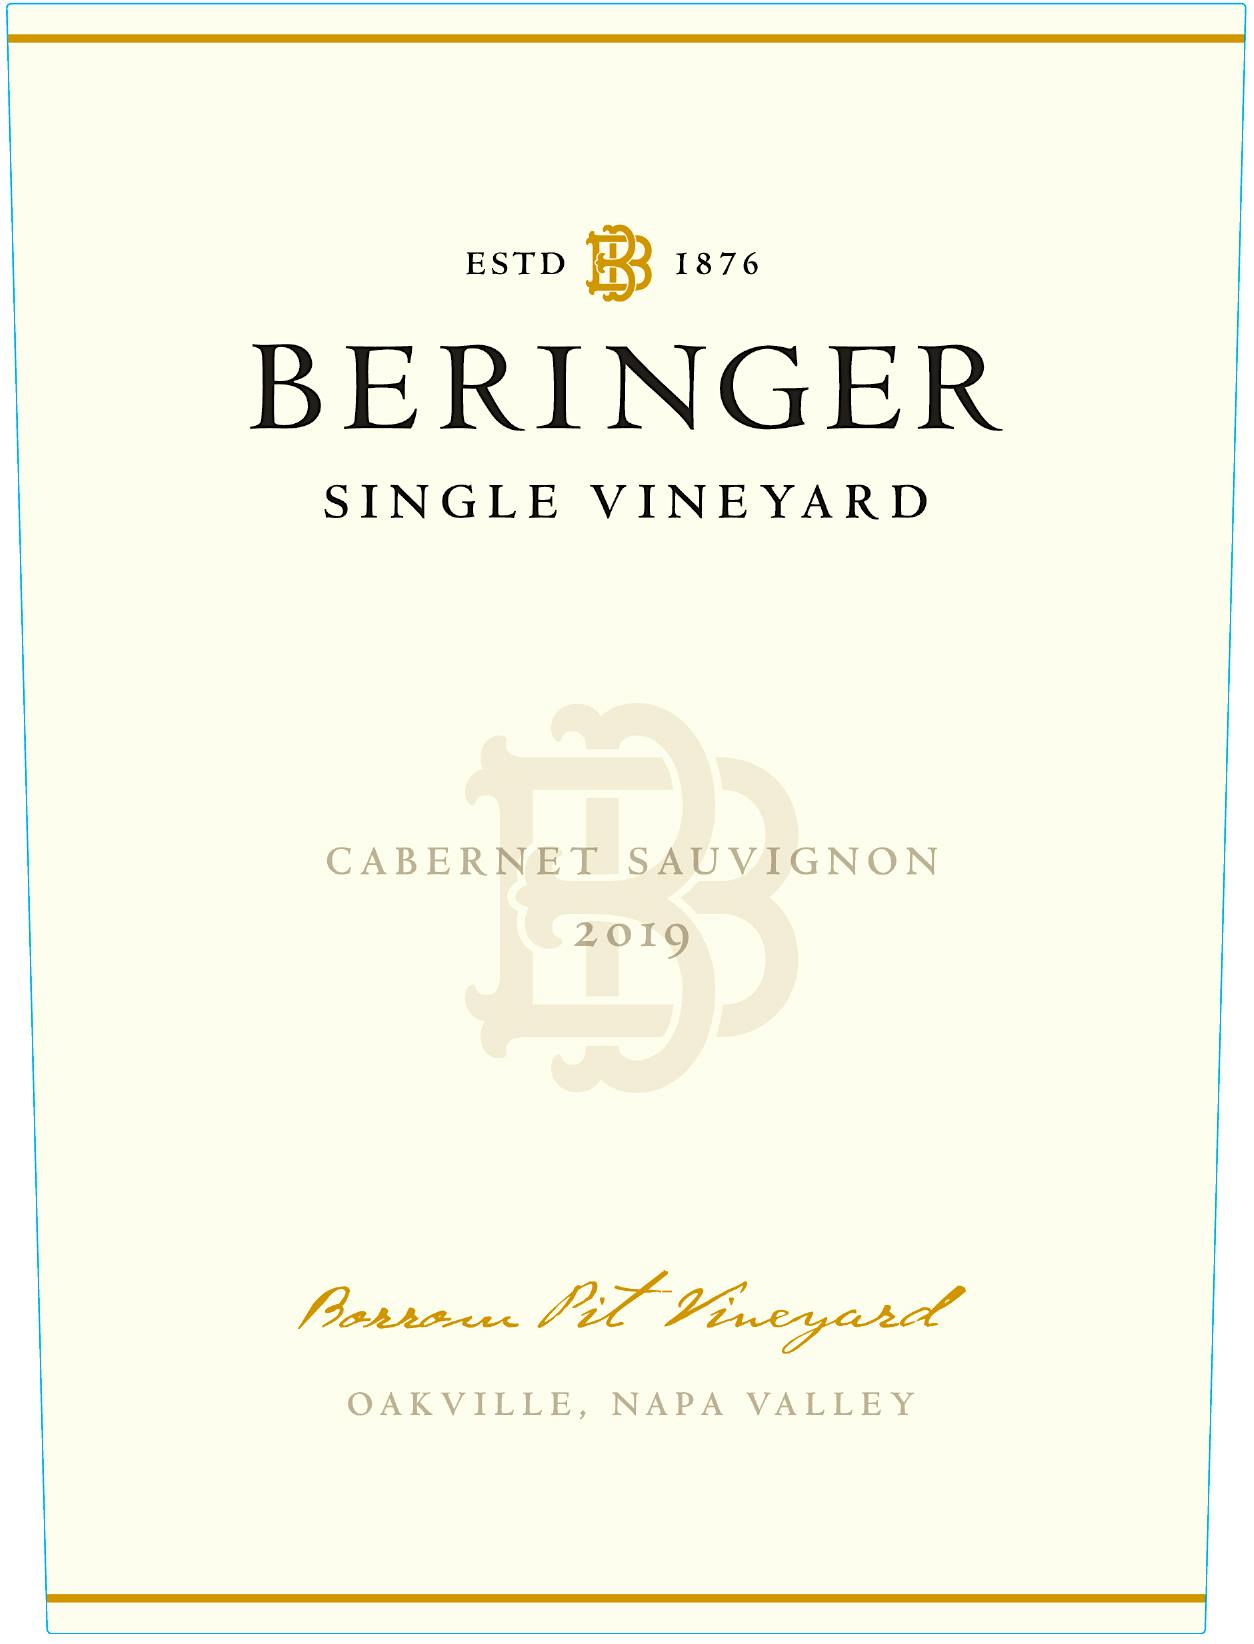 Label for Beringer